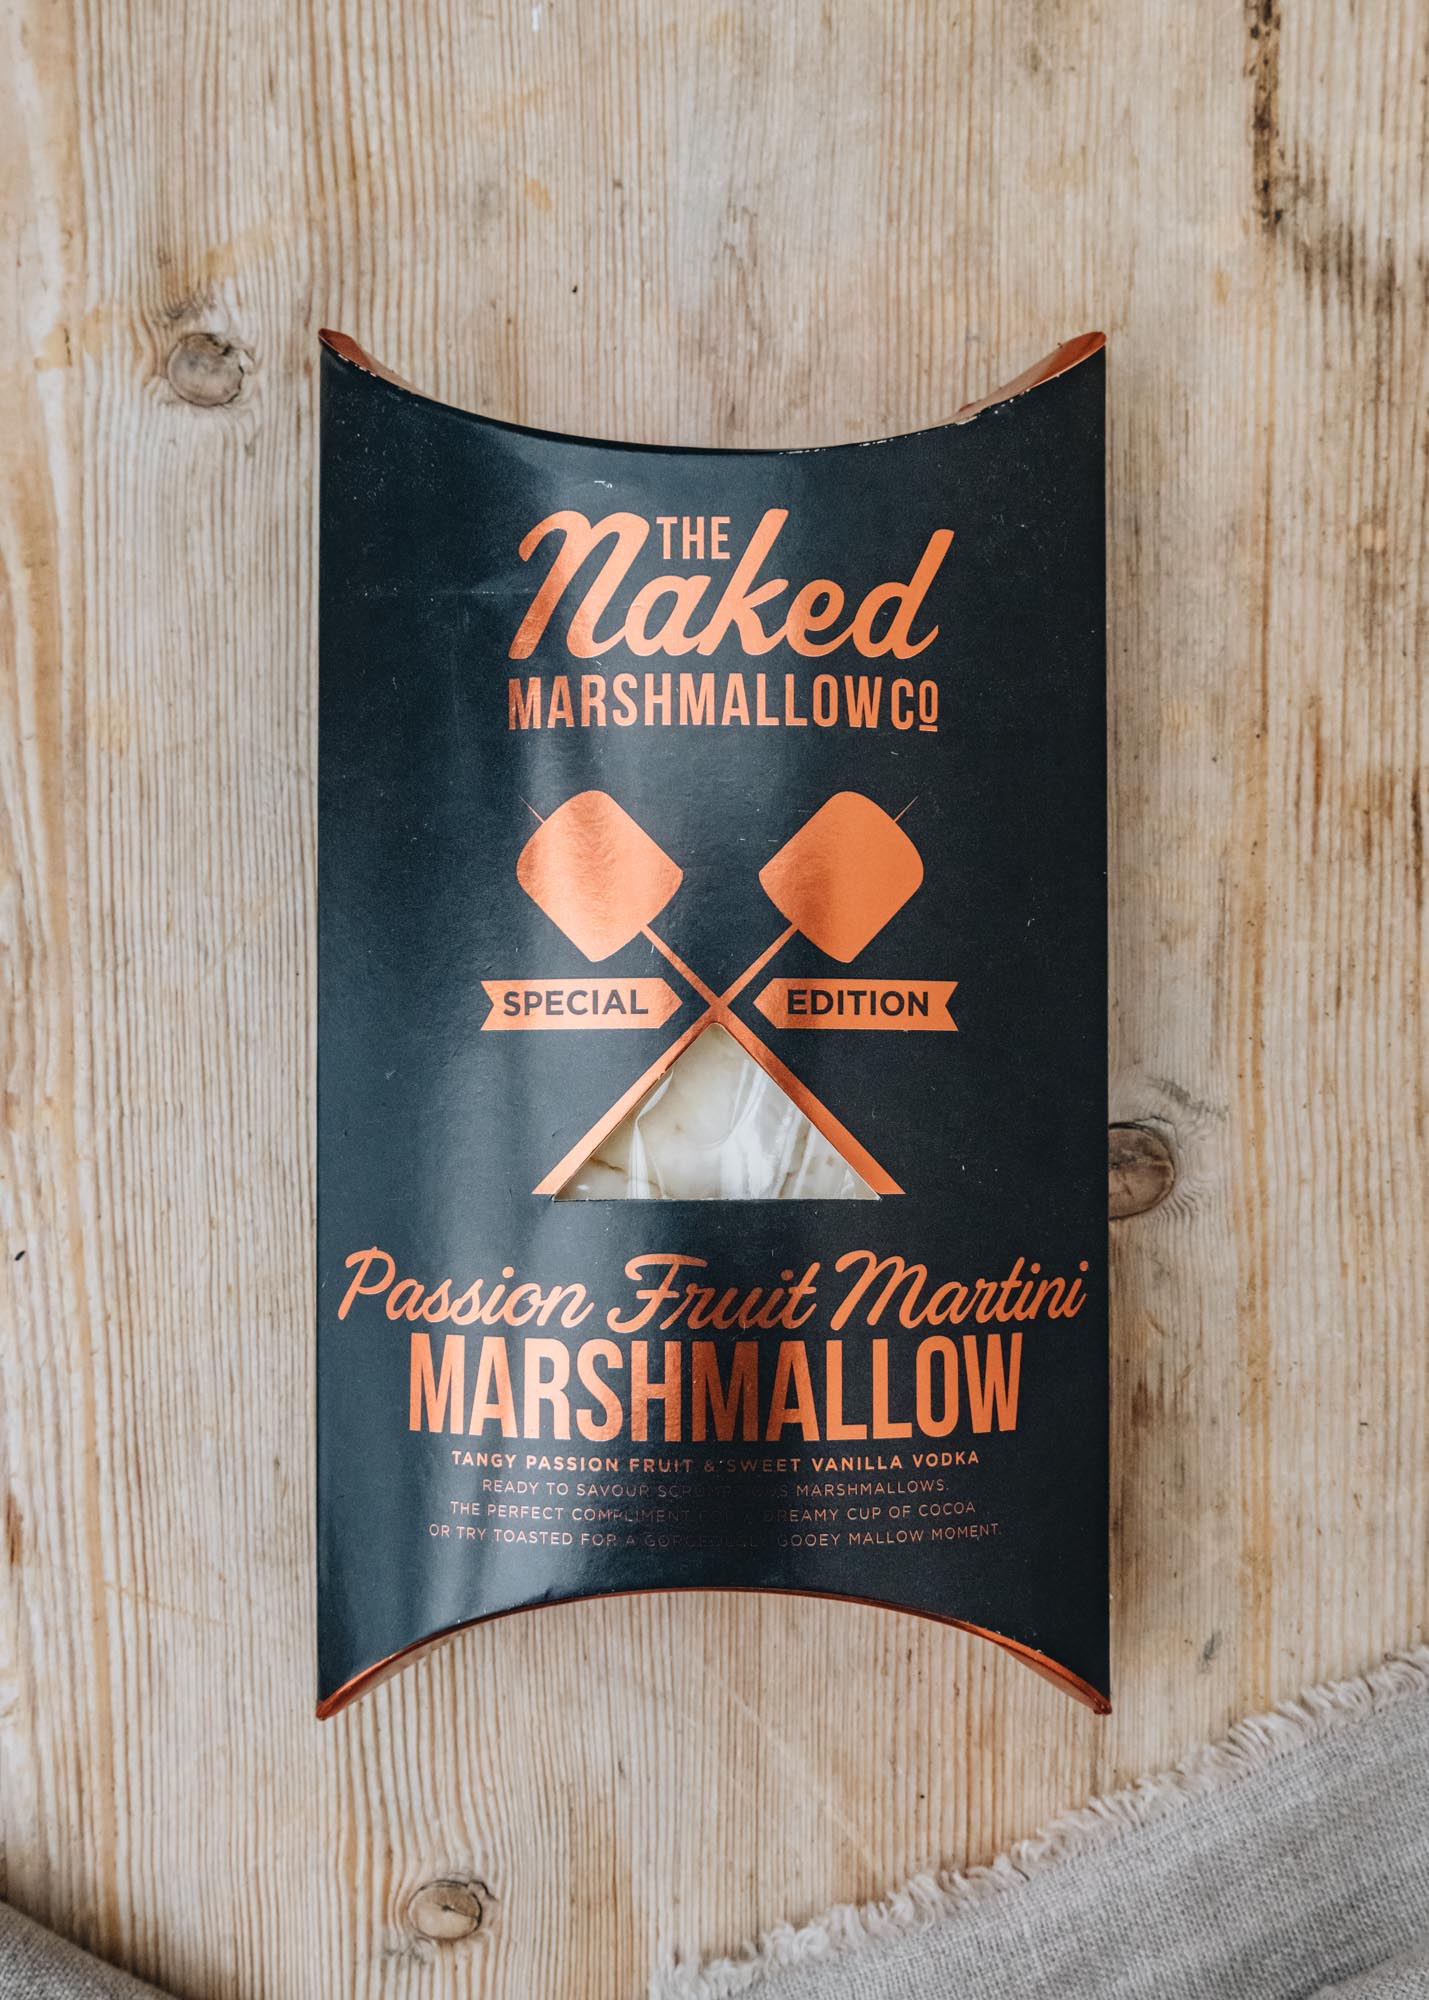 The Naked Marshmallow Co. Passionfruit Martini Marshmallows